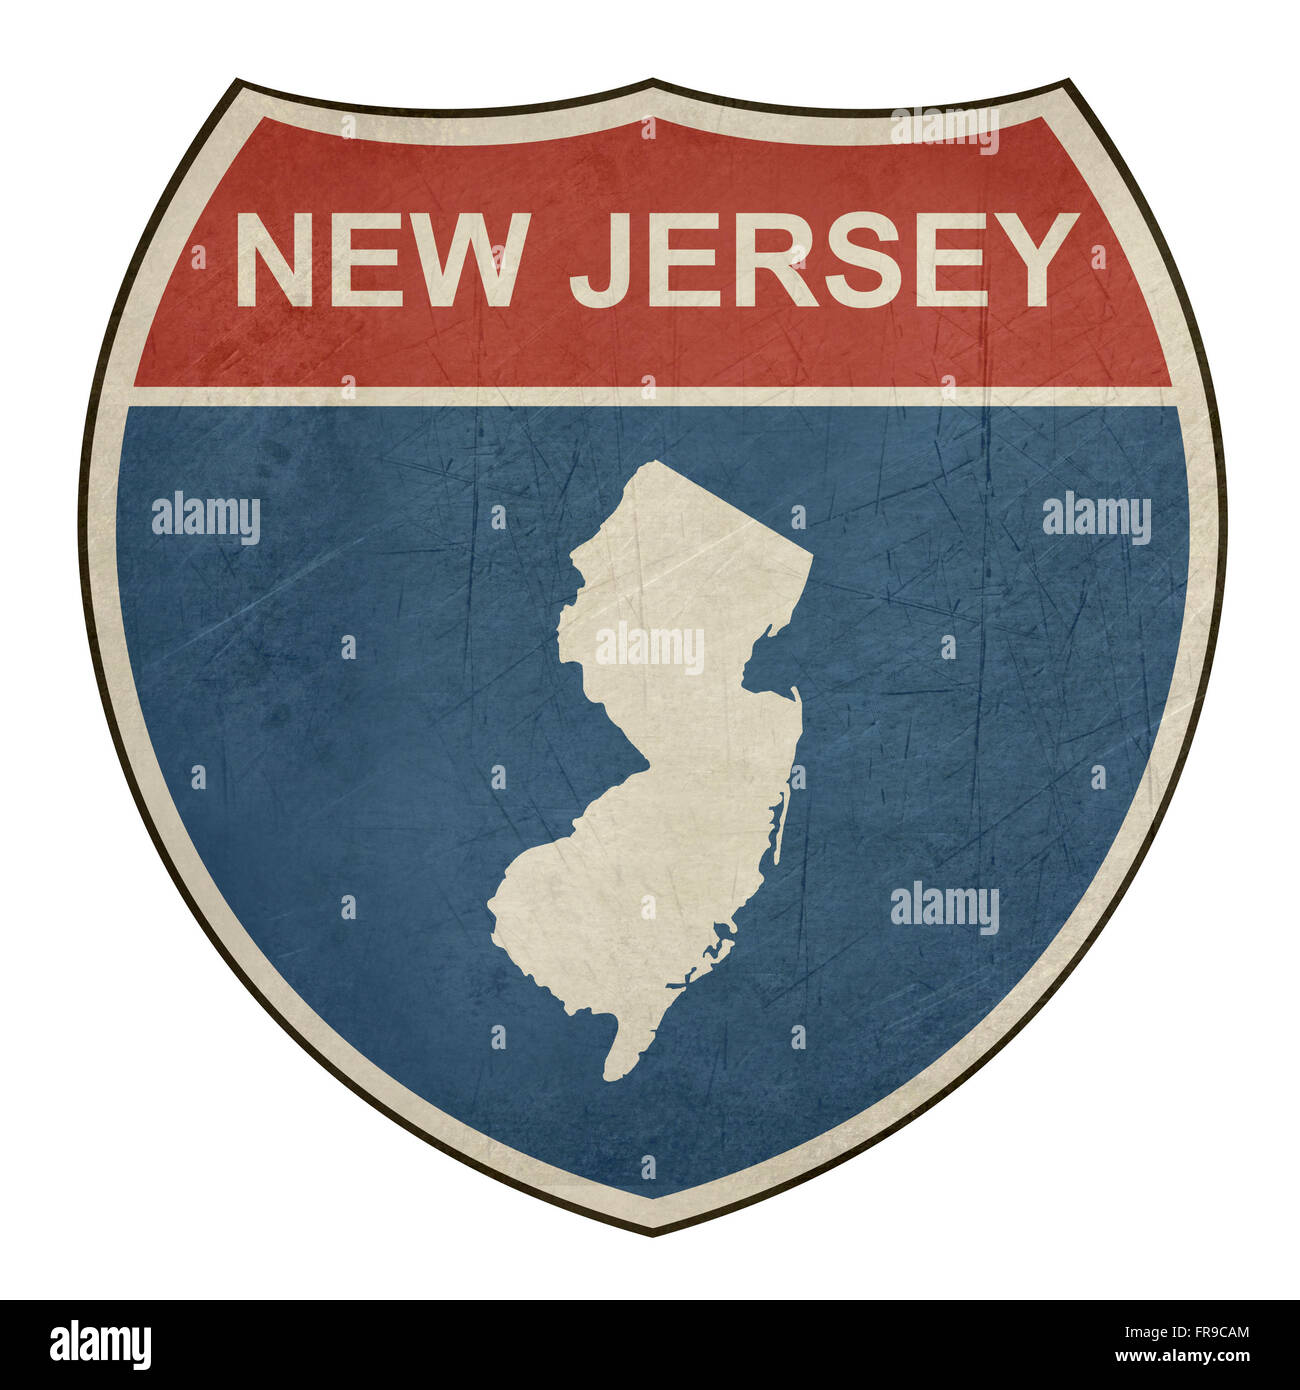 Grunge New Jersey autopista interestatal escudo de carretera aislado sobre un fondo blanco. Foto de stock